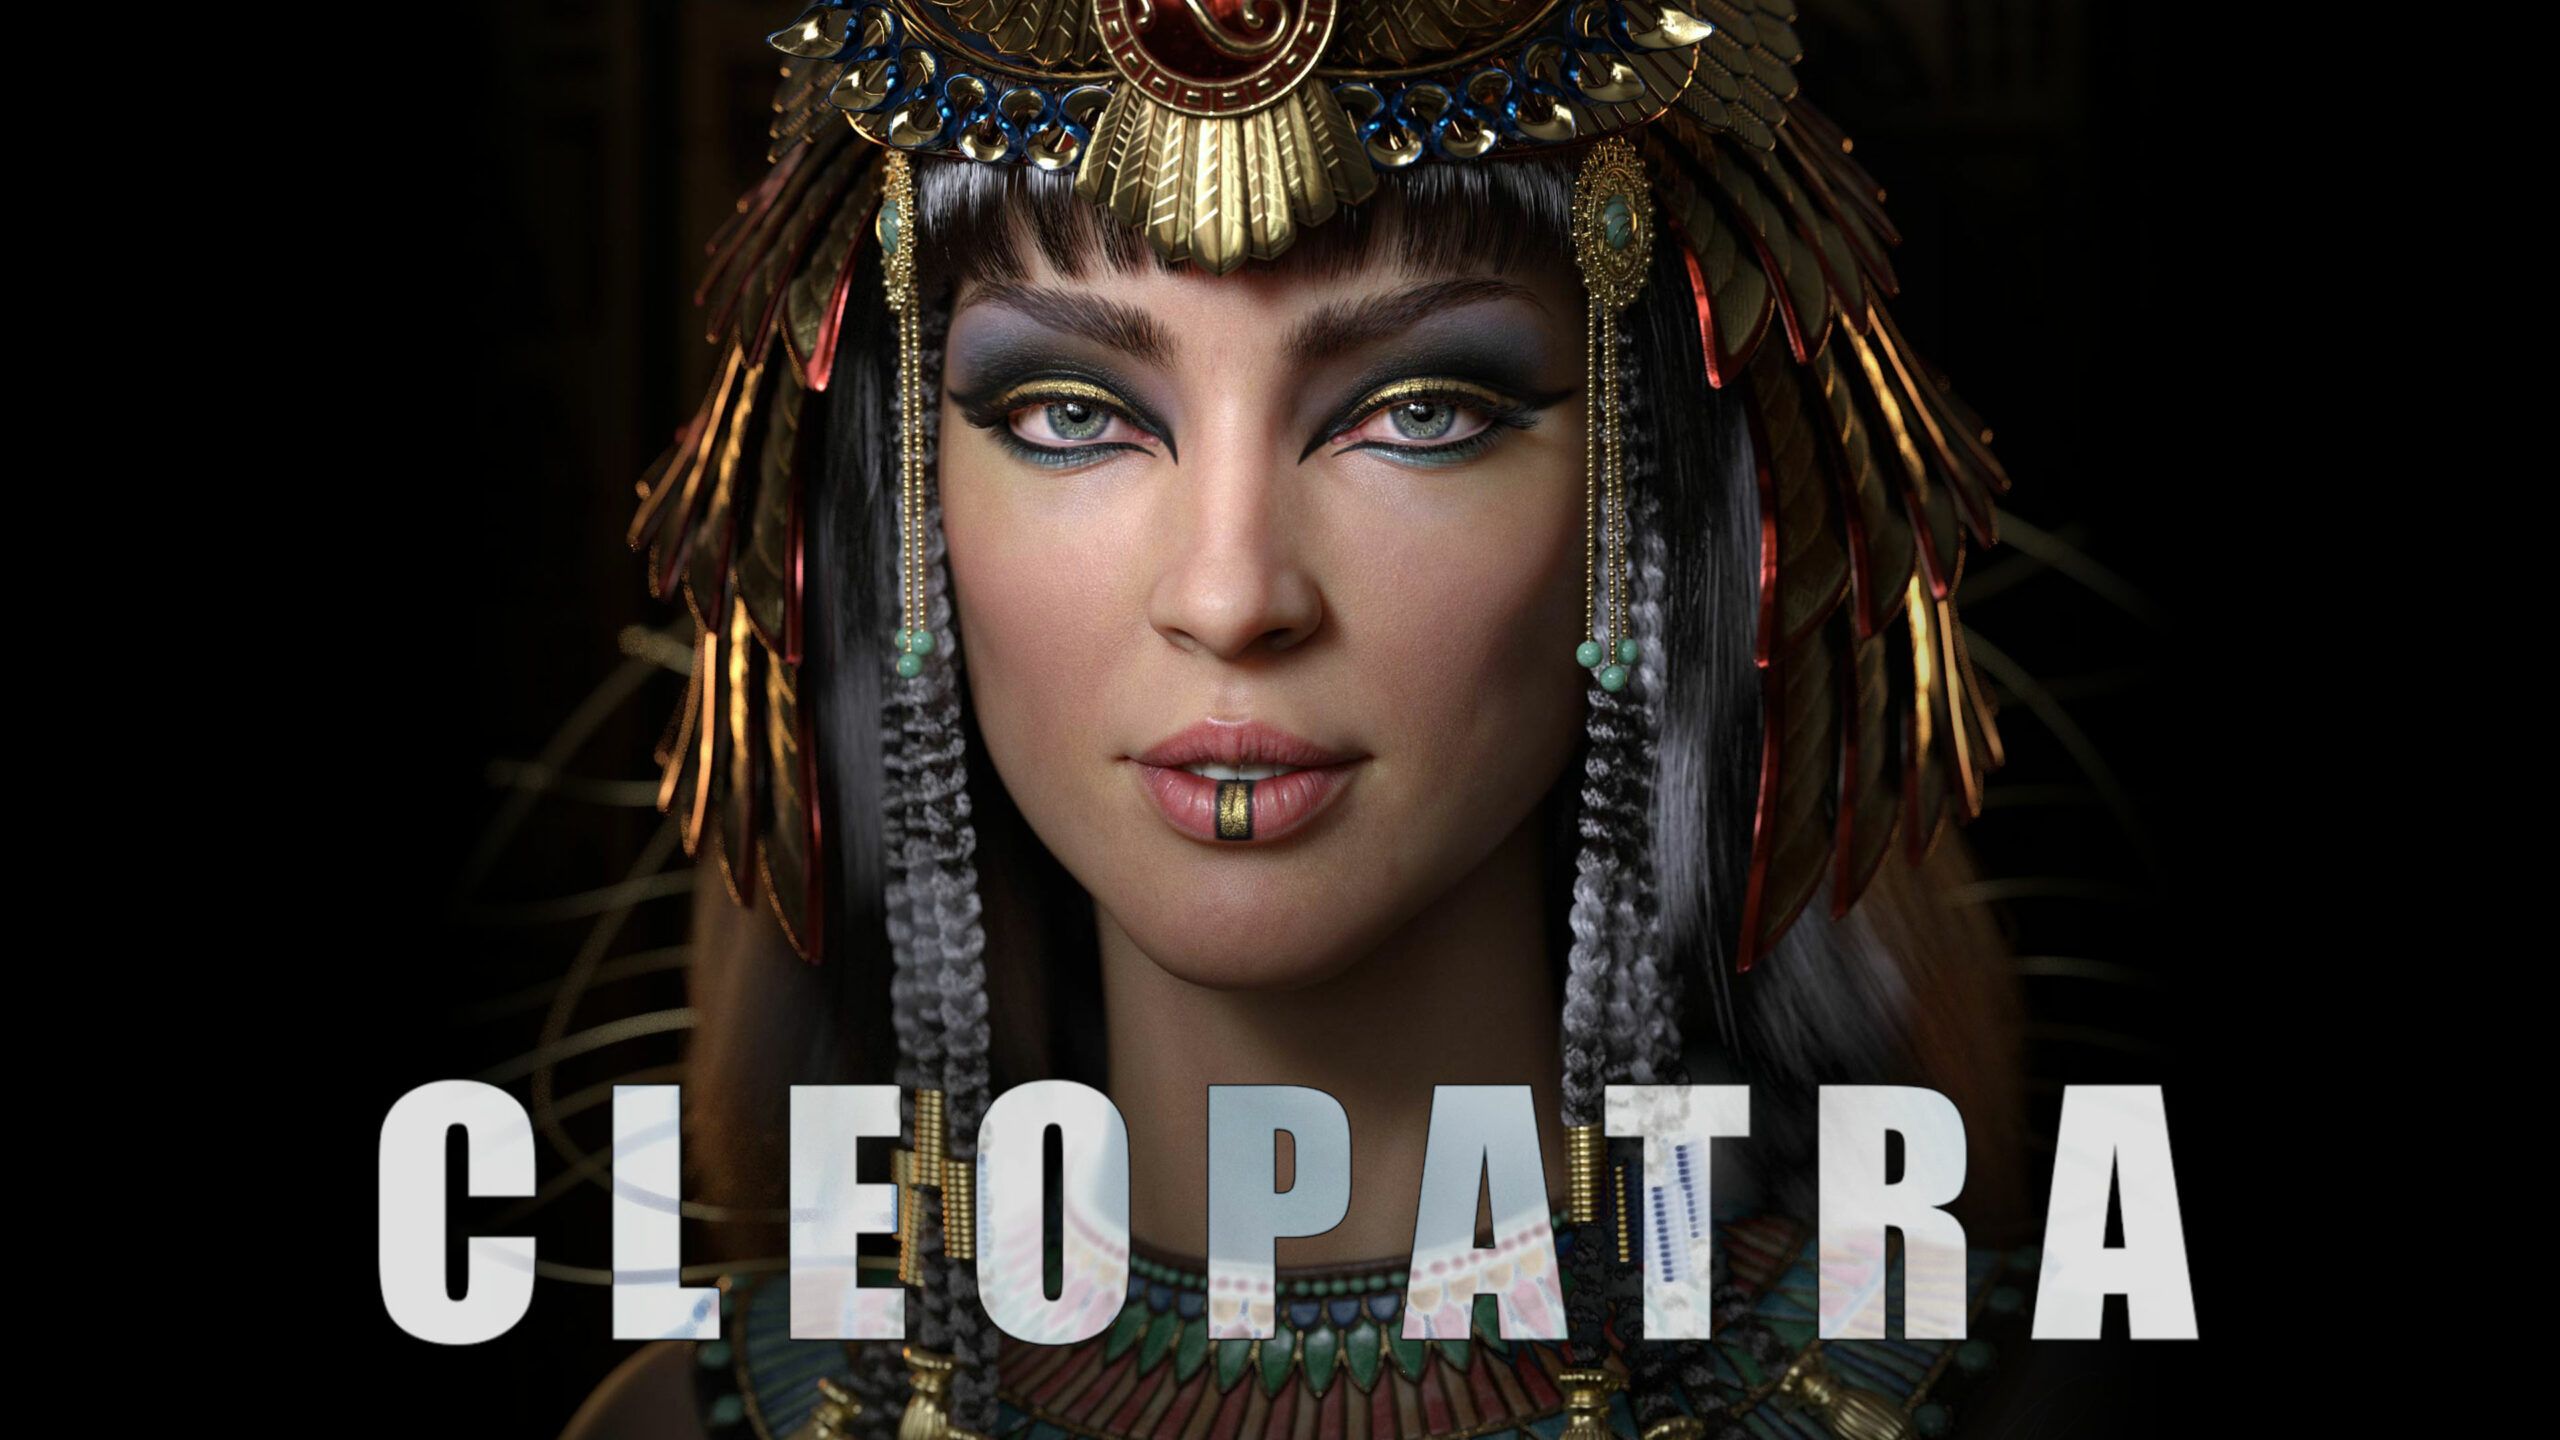 cleopatra_3d_character_zbrush_maya_alexander_beim-scaled Cleopatra CG Character